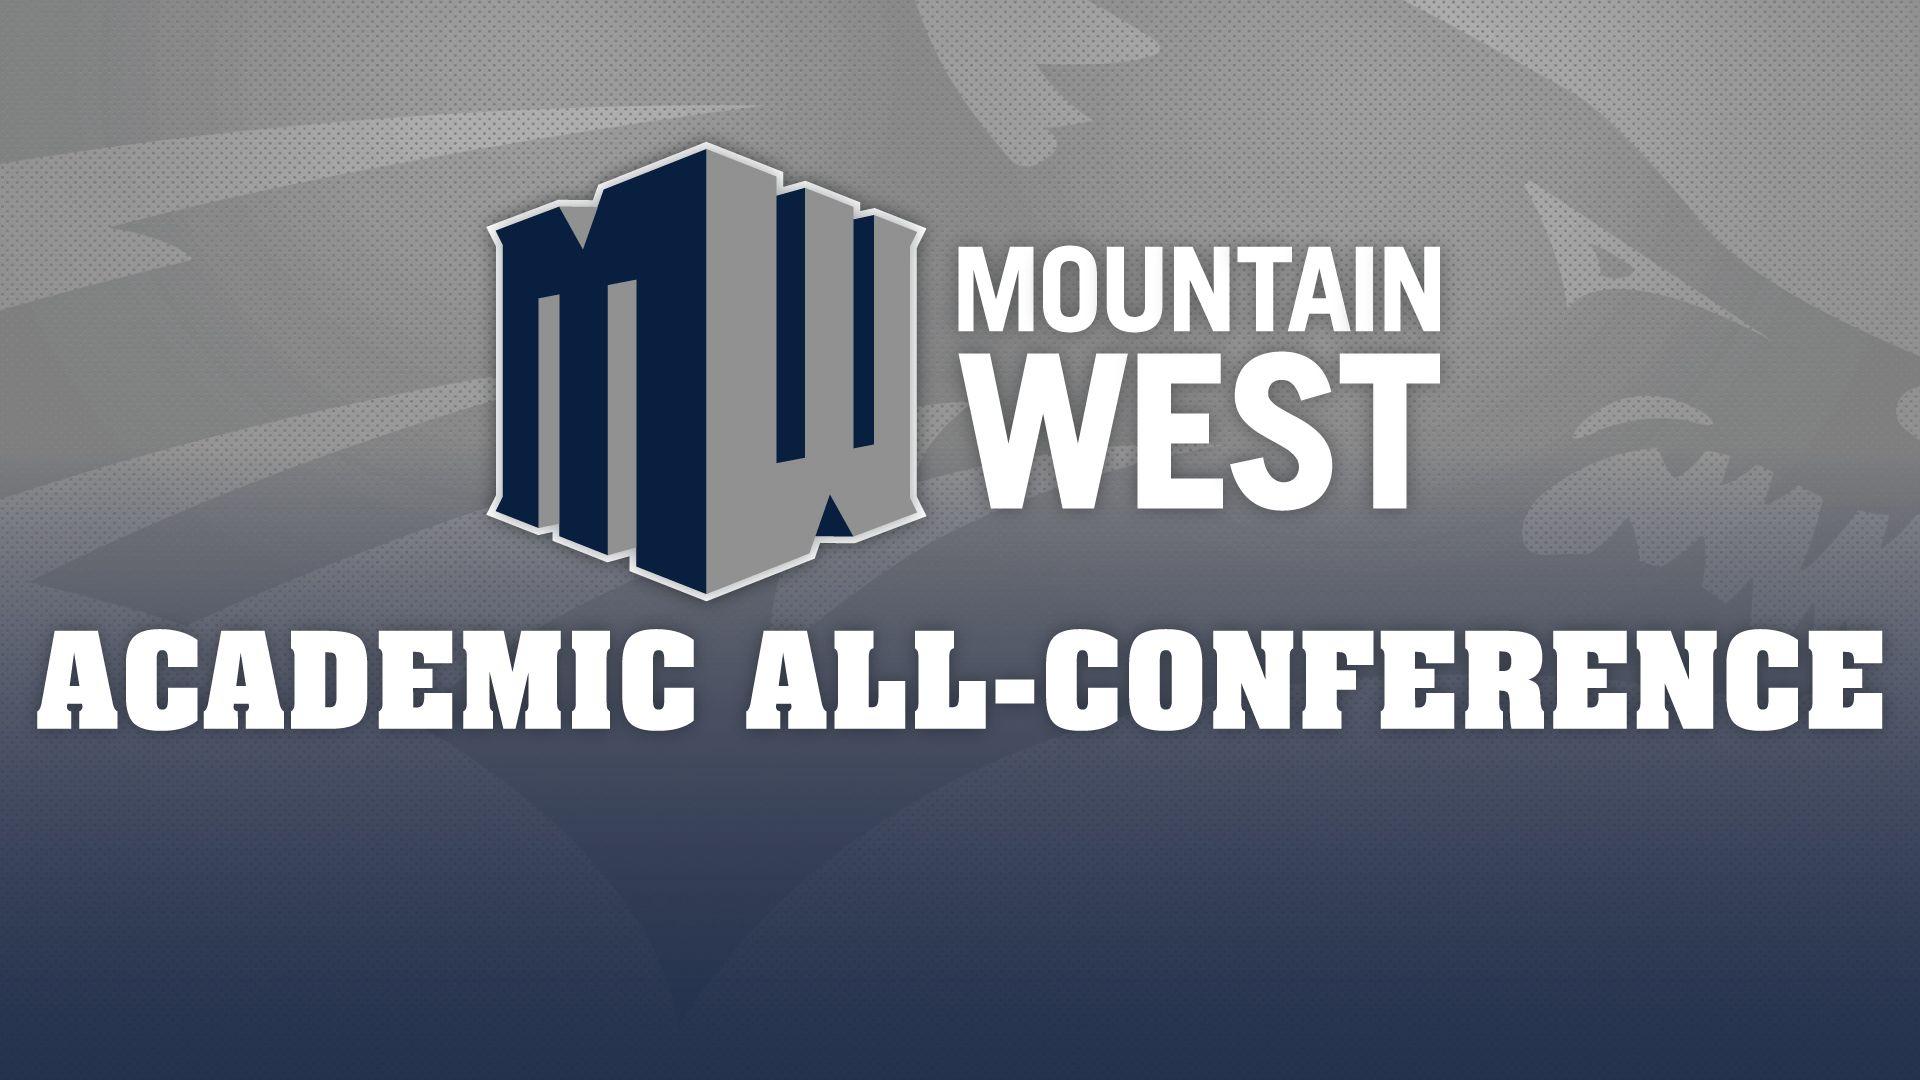 Nevada Mountain Logo - Nevada Places 87 Athletes On Spring 2018 Academic All Mountain West